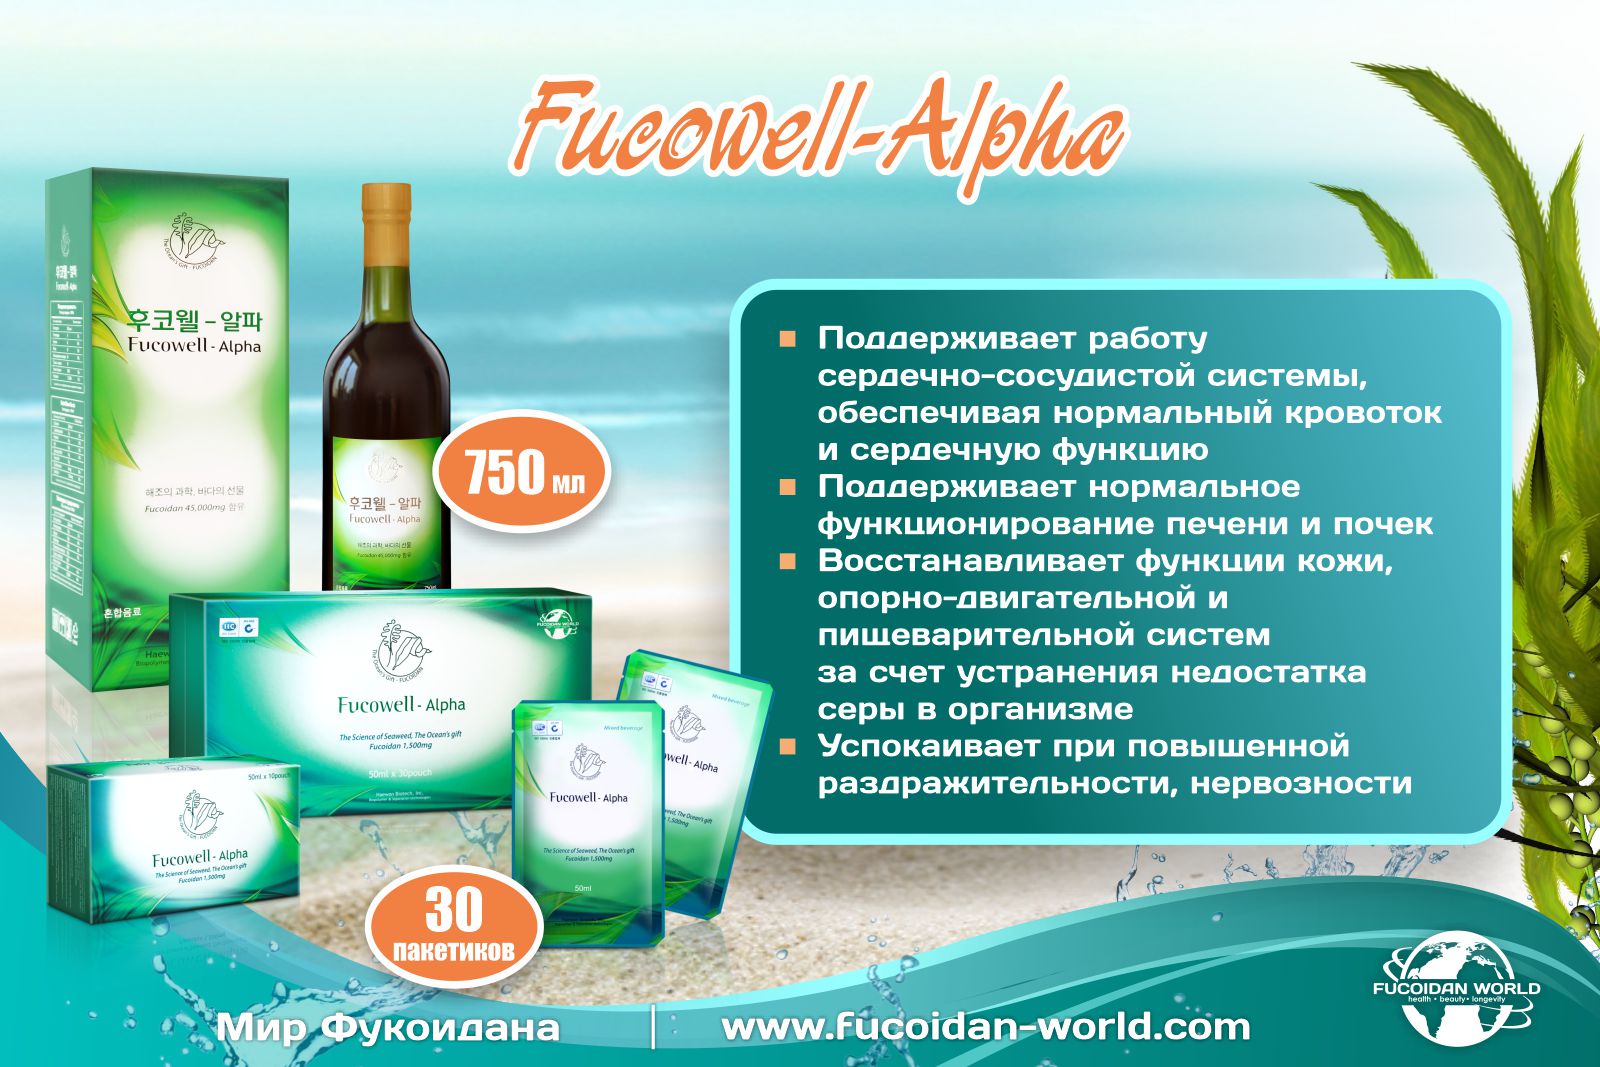 Fucowell-Alpha